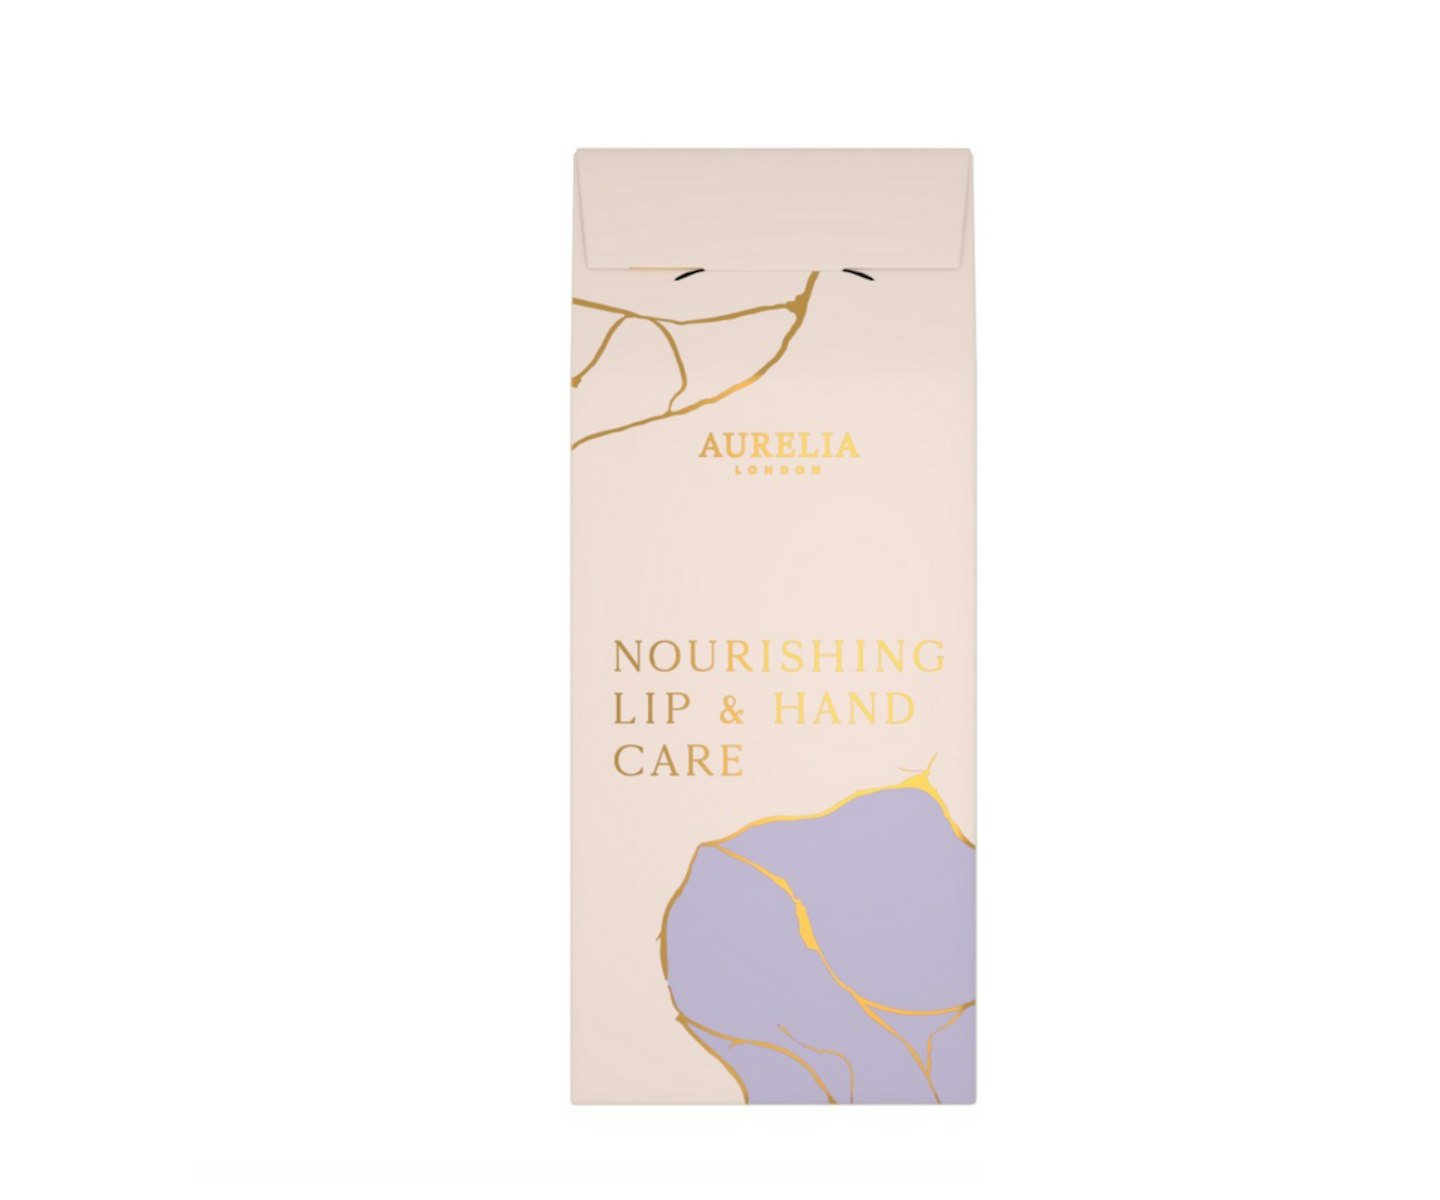 Aurelia Norishing Lip & Hand Care